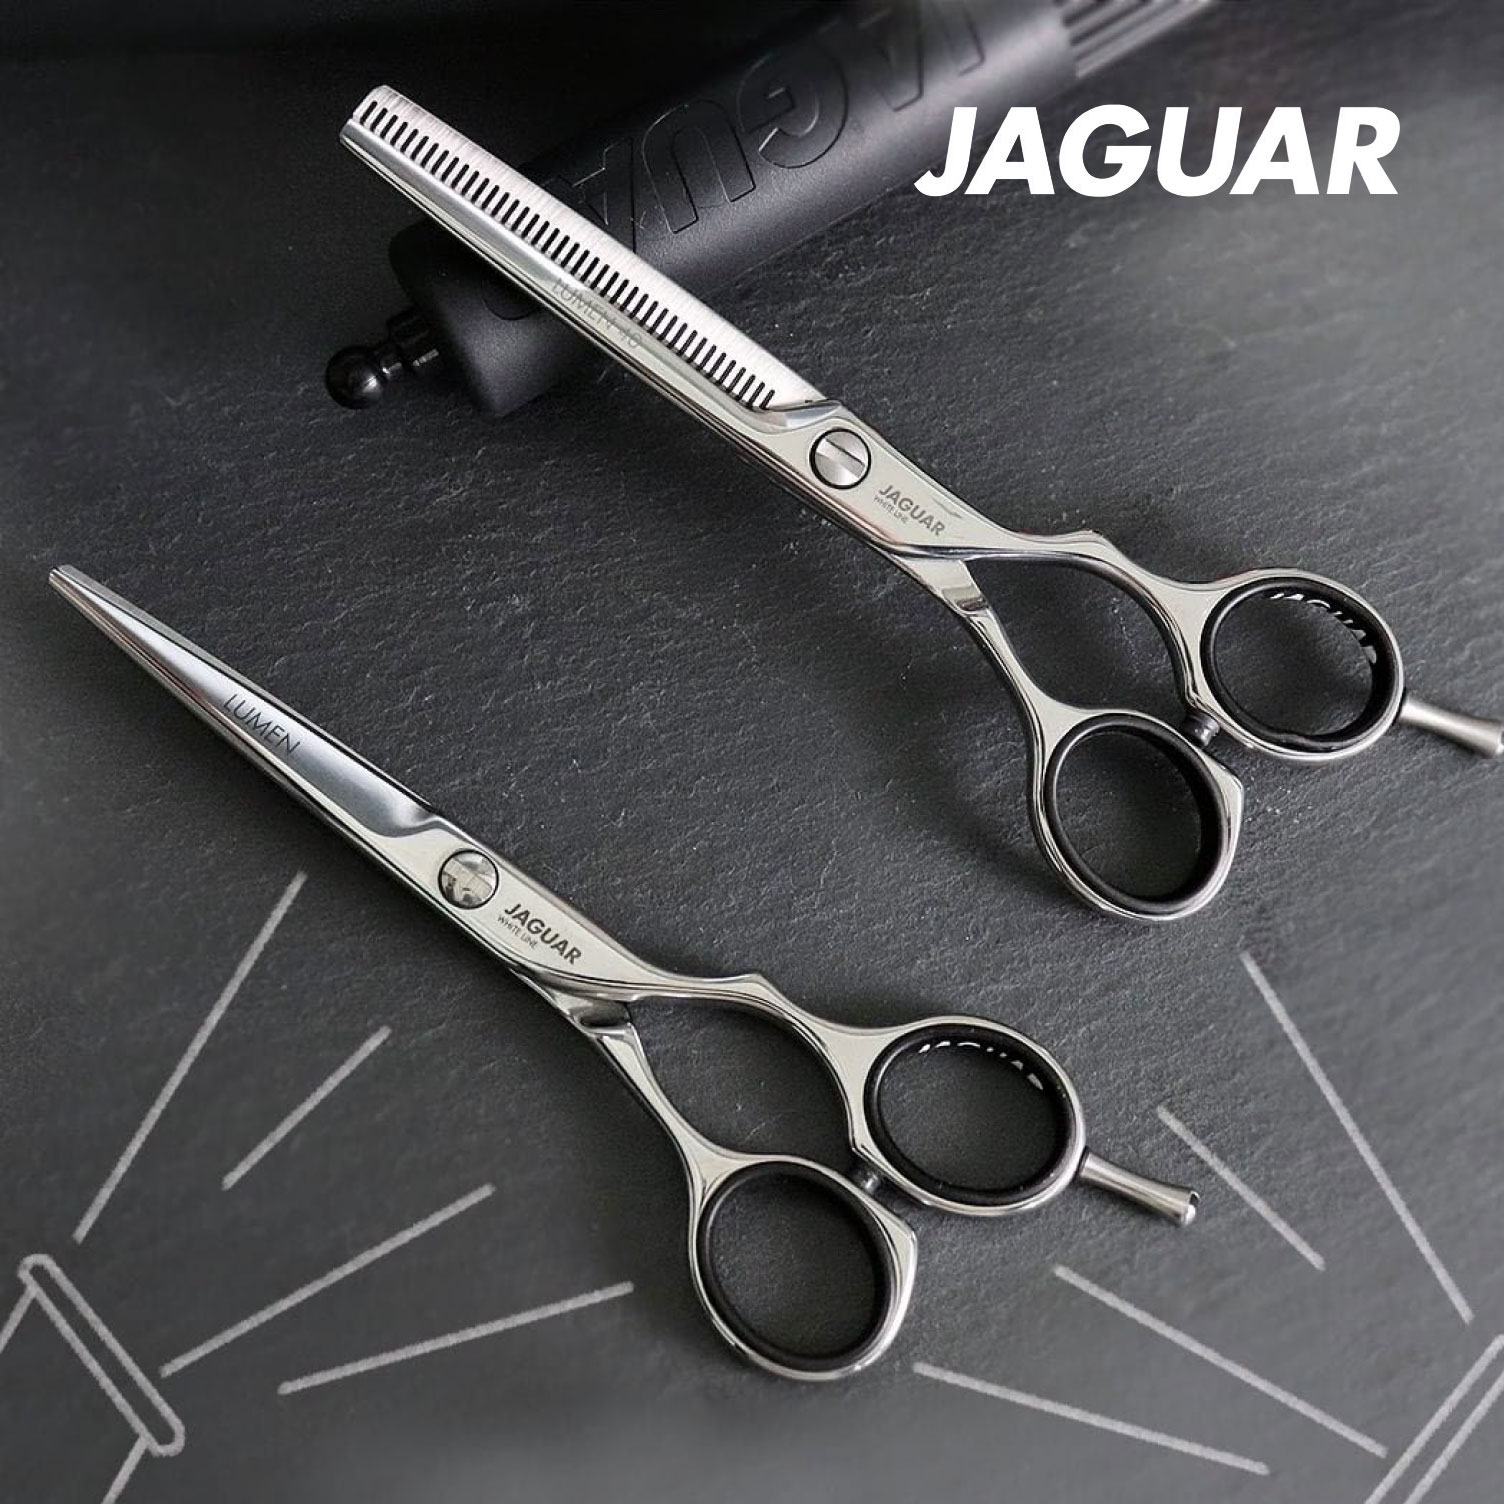 Jaguar Lumen and Jaguart Scissors